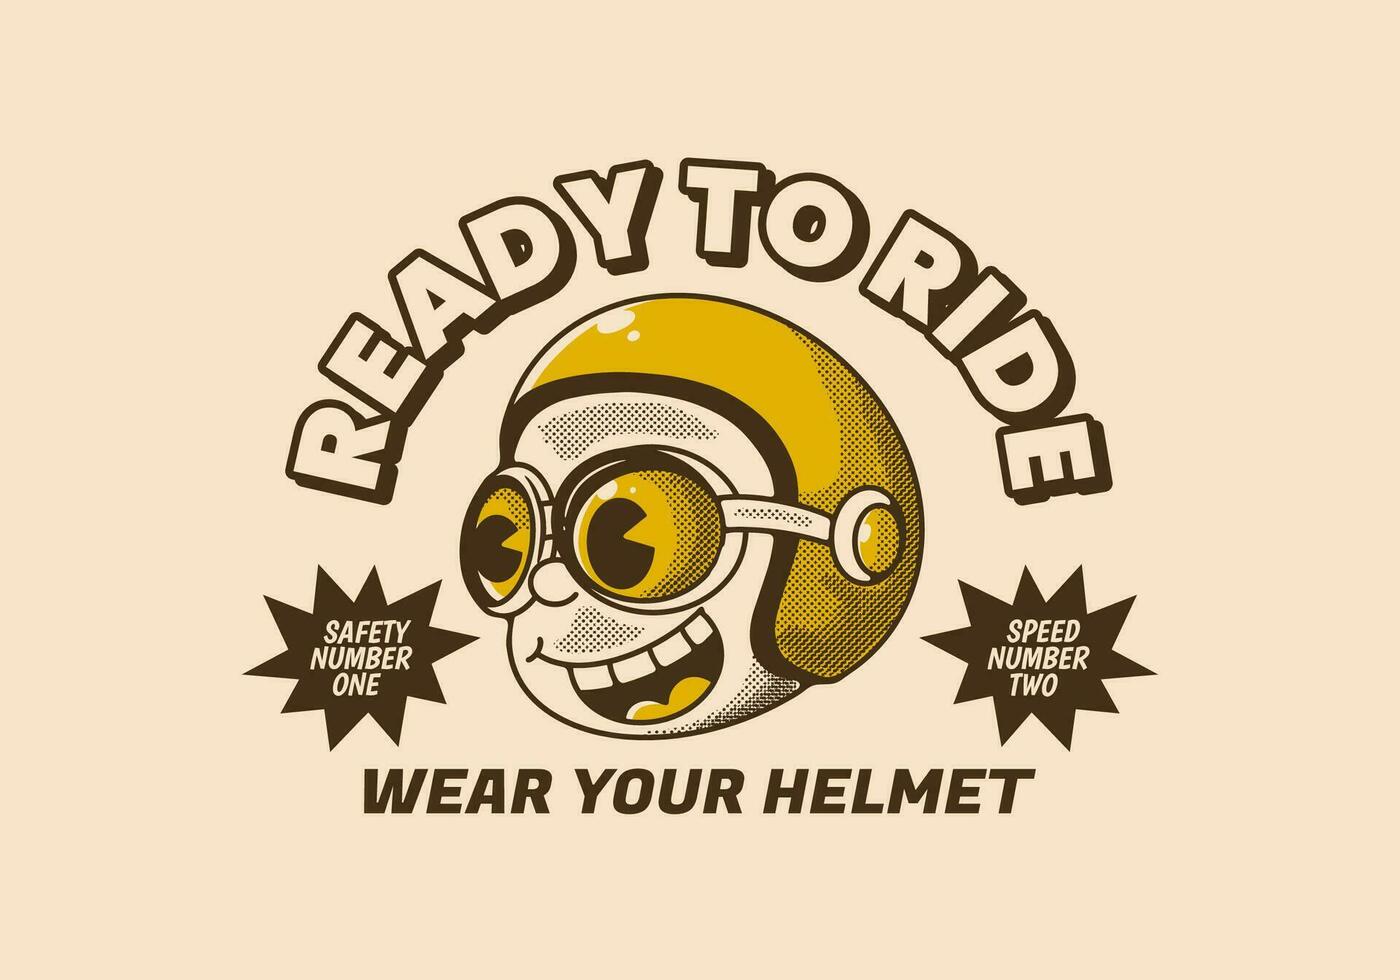 Ready to ride. Wear your helmet. Retro illustration of a boy head wearing helmet vector